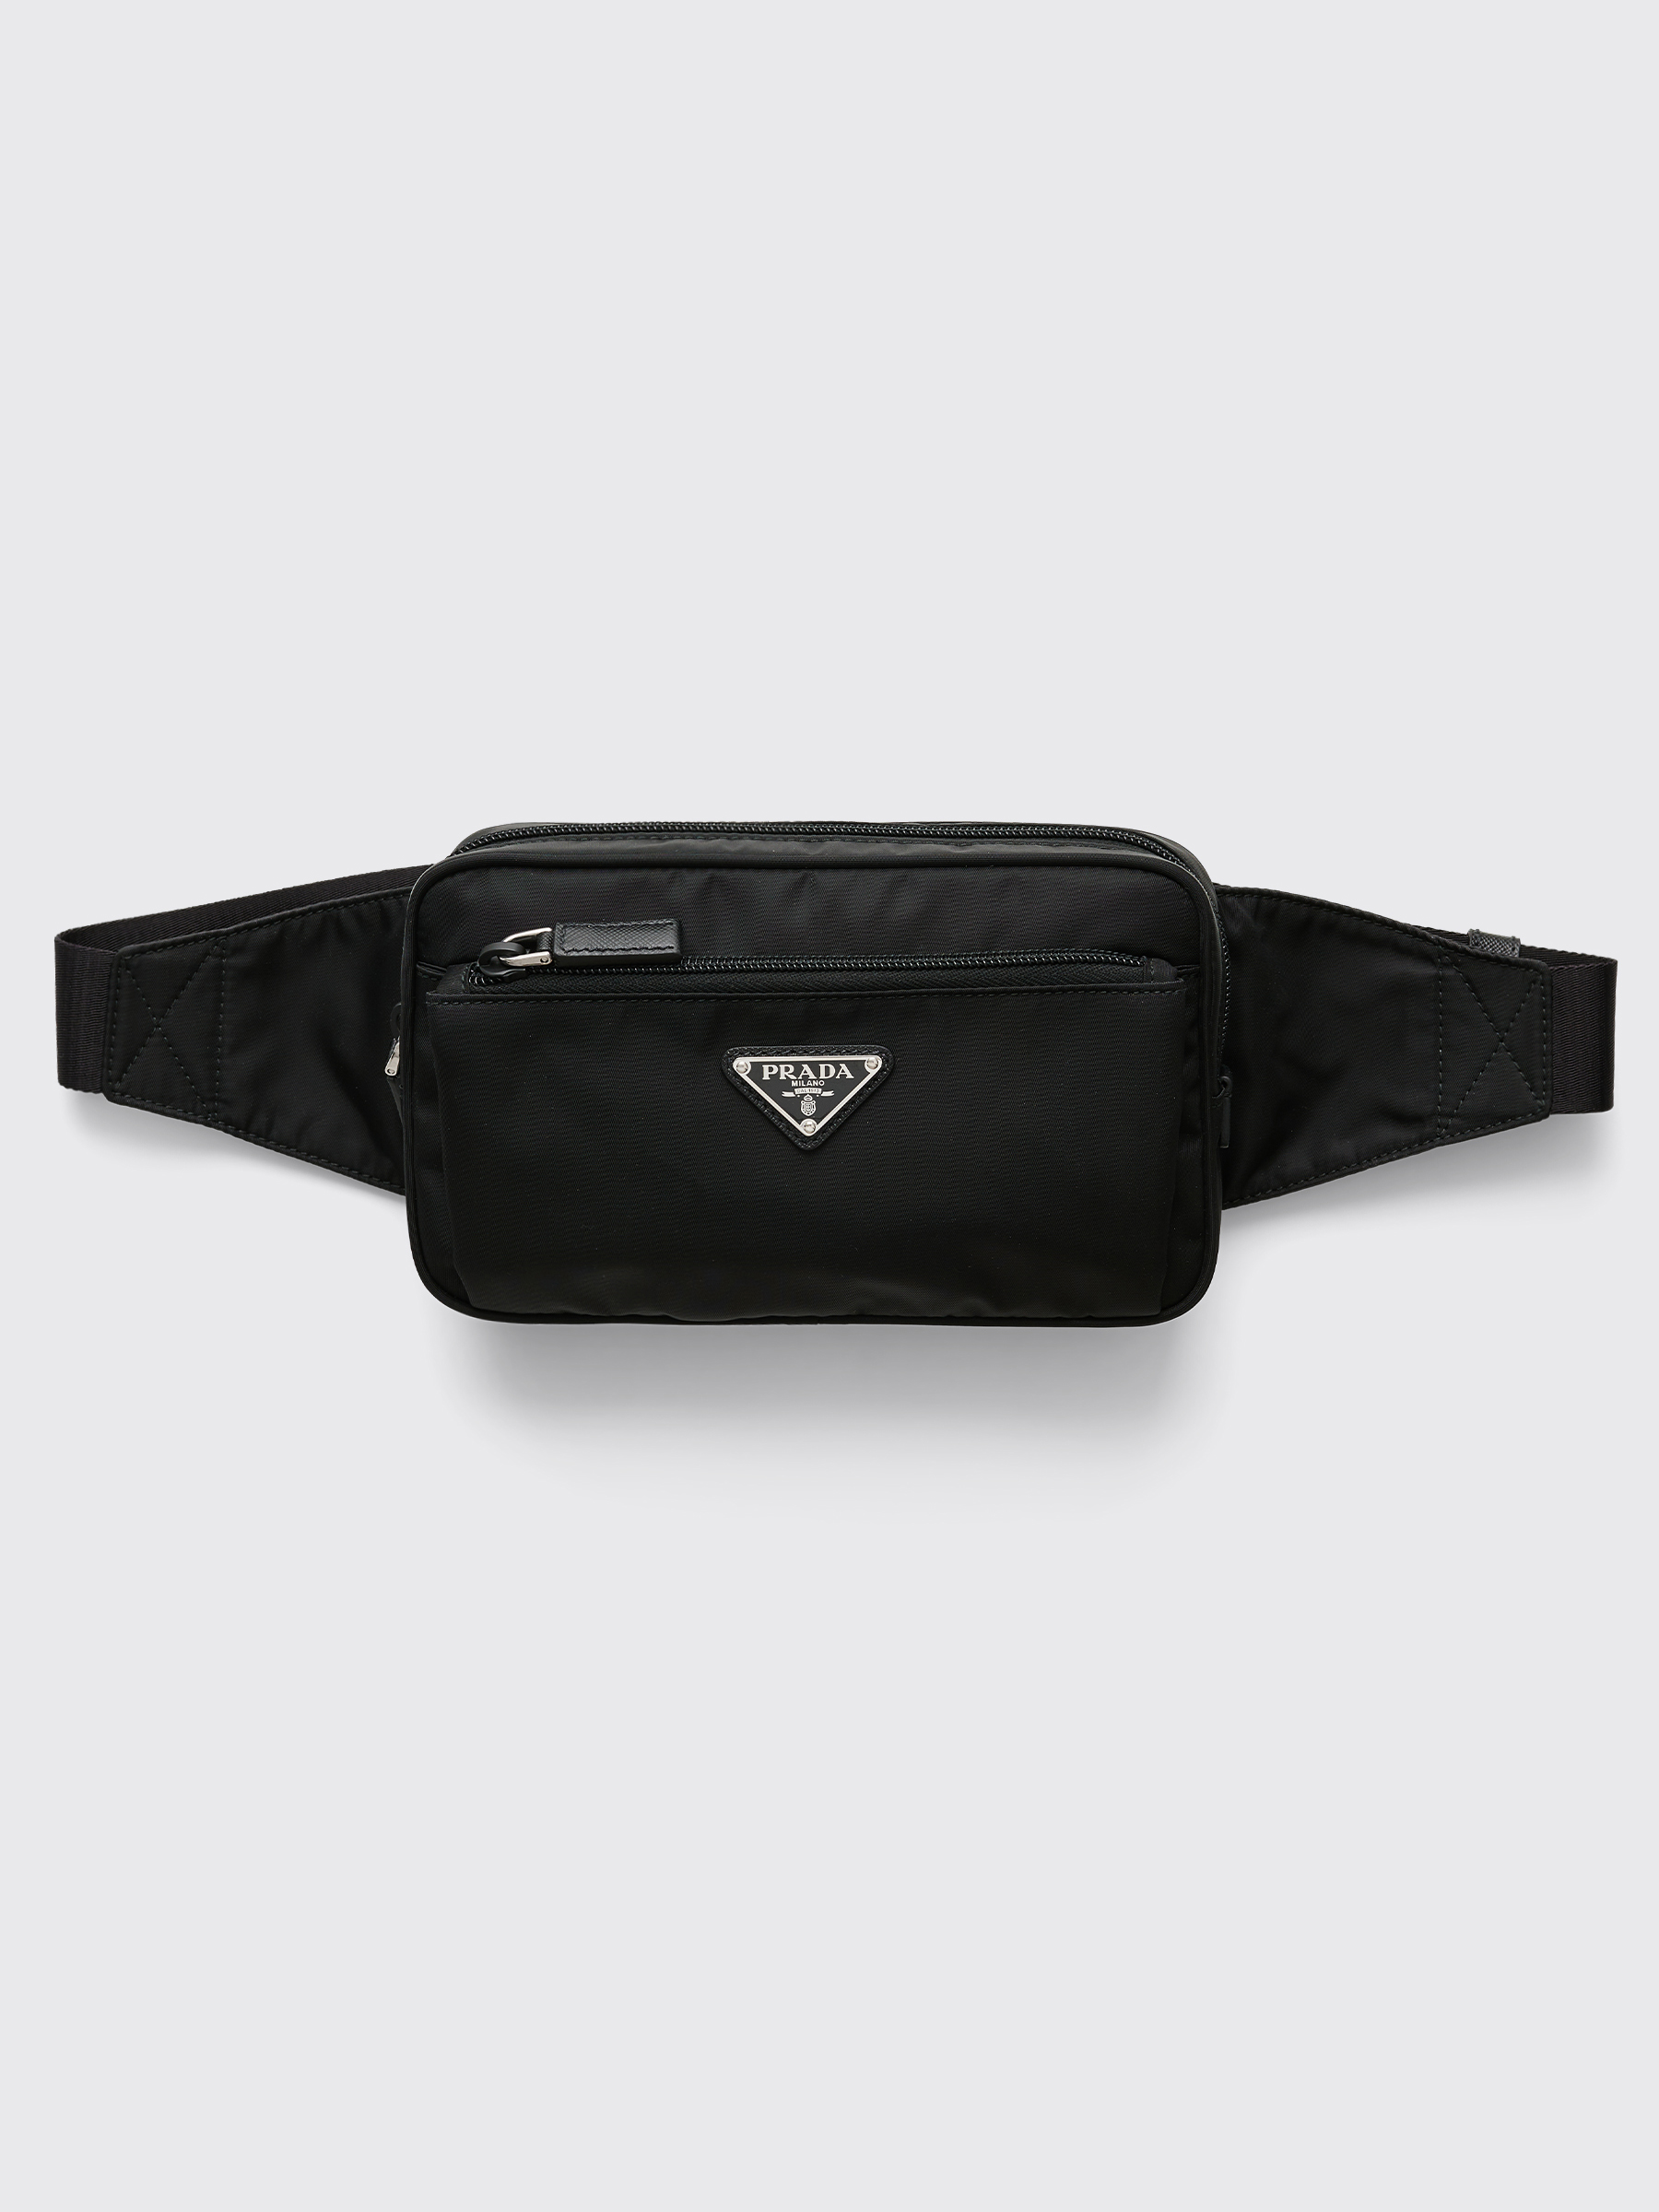 Prada Saffiano Leather Belt Bag in Black